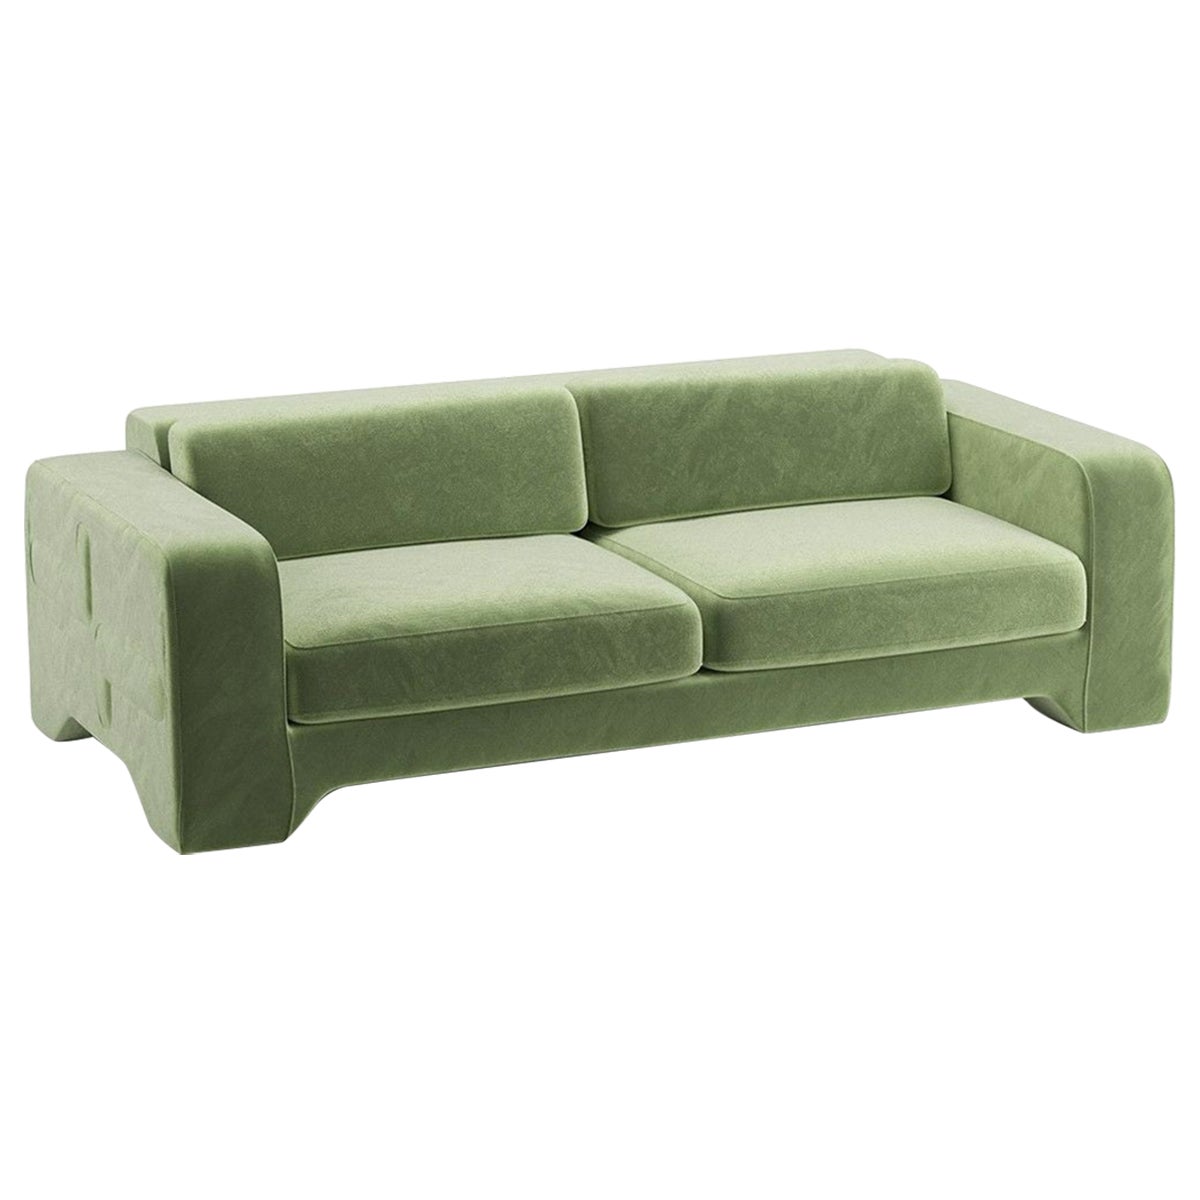 Popus Editions Giovanna 3 Seater Sofa in Green Verone Velvet Upholstery